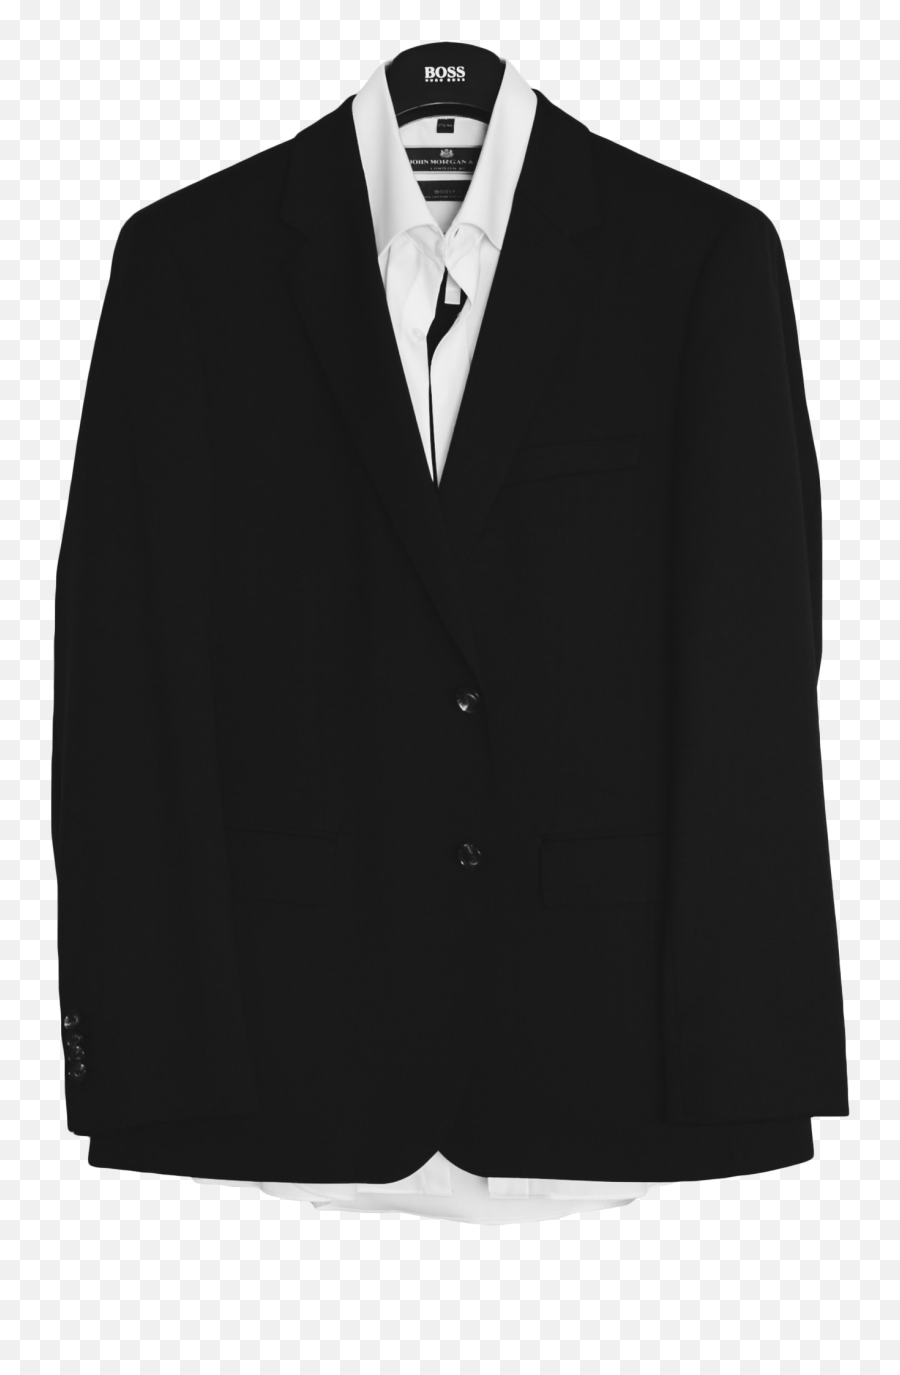 Black Suit Transparent Background Free - Hanged Jacket Png,Suit Transparent Background